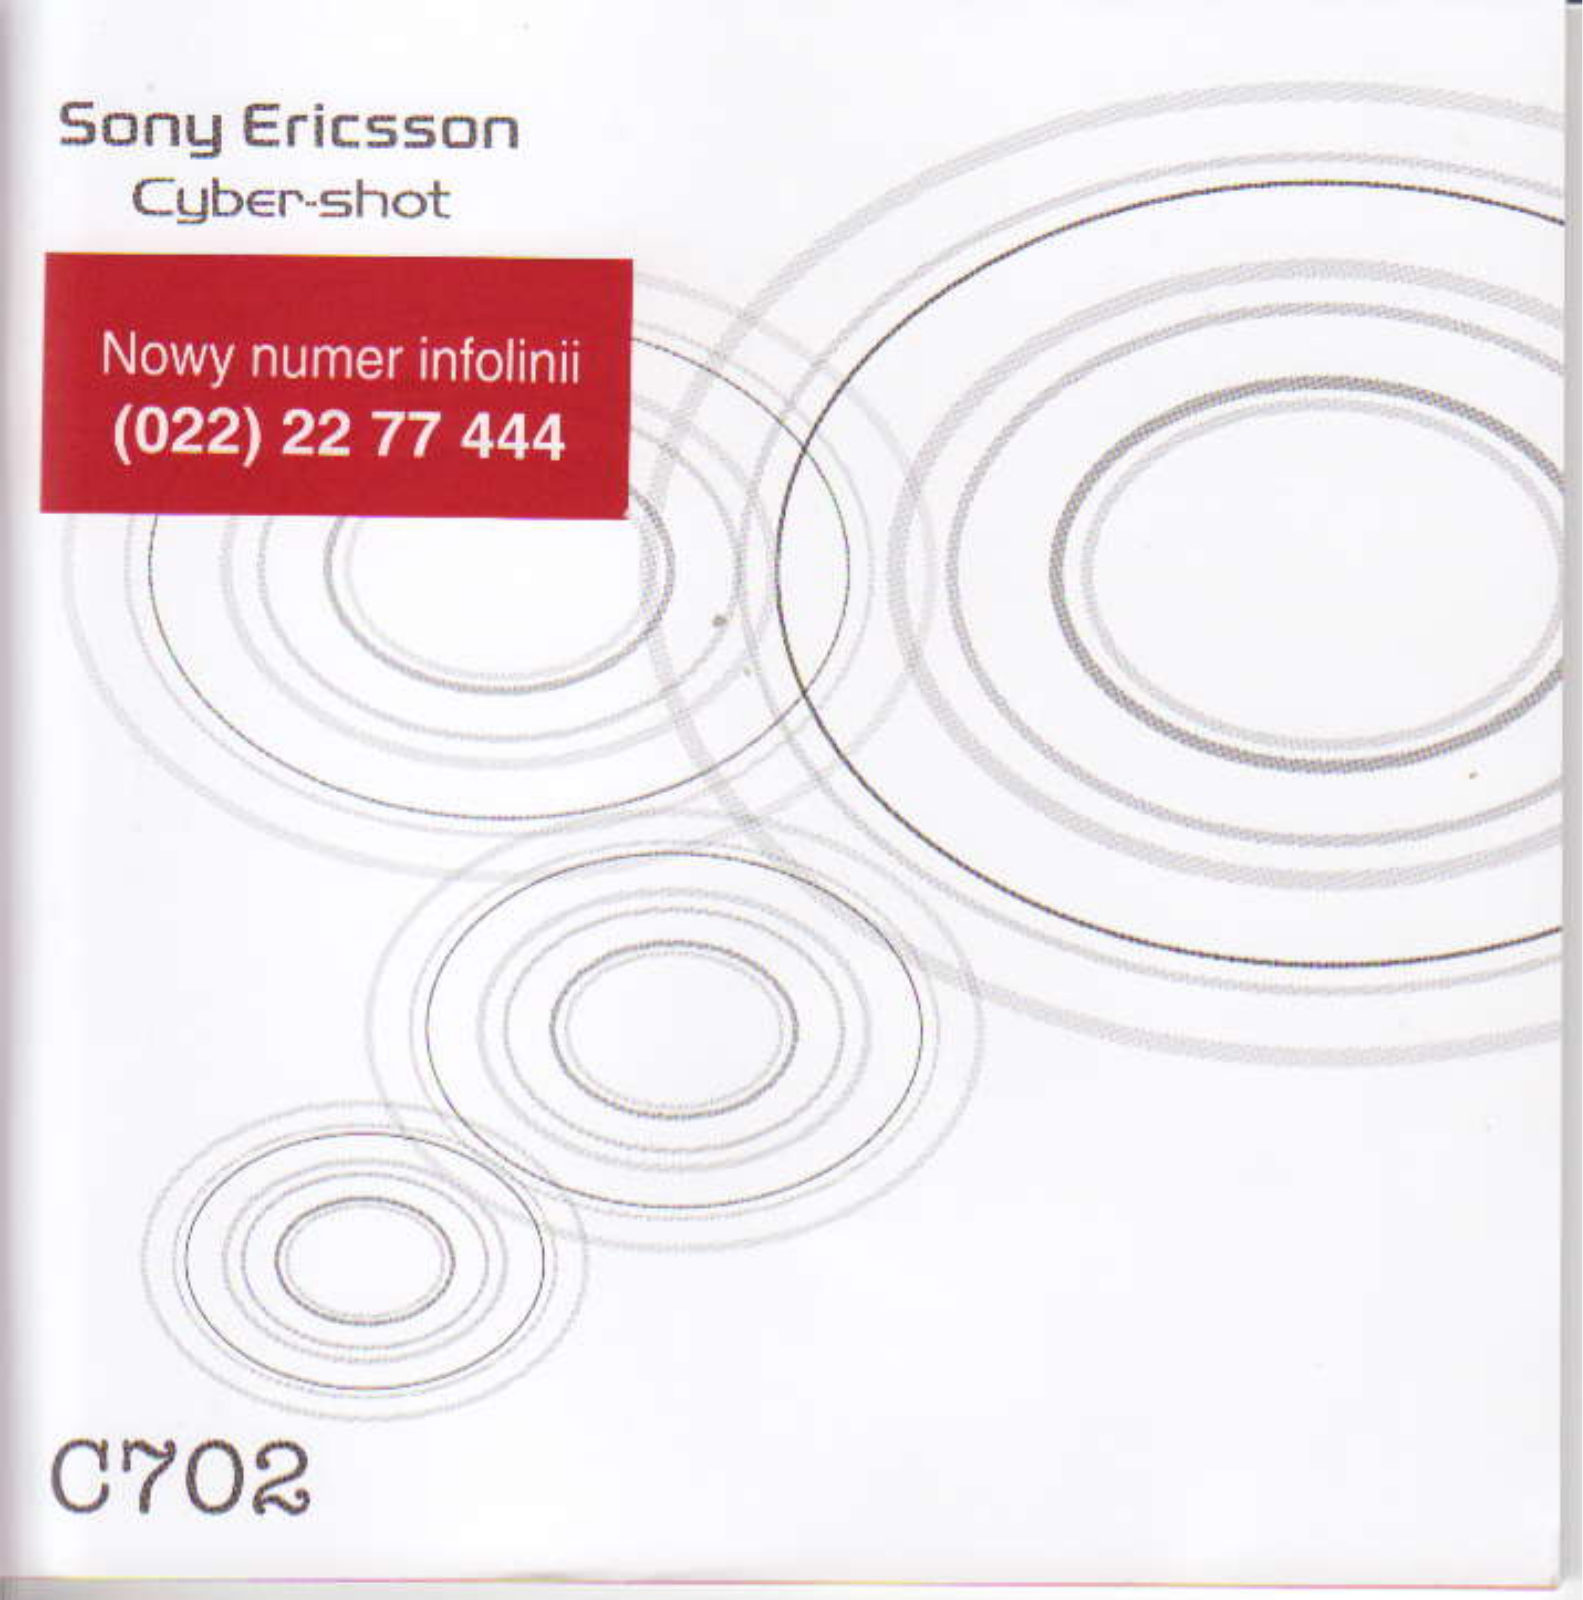 Sony ericsson C702 CYBER-SHOT User Manual